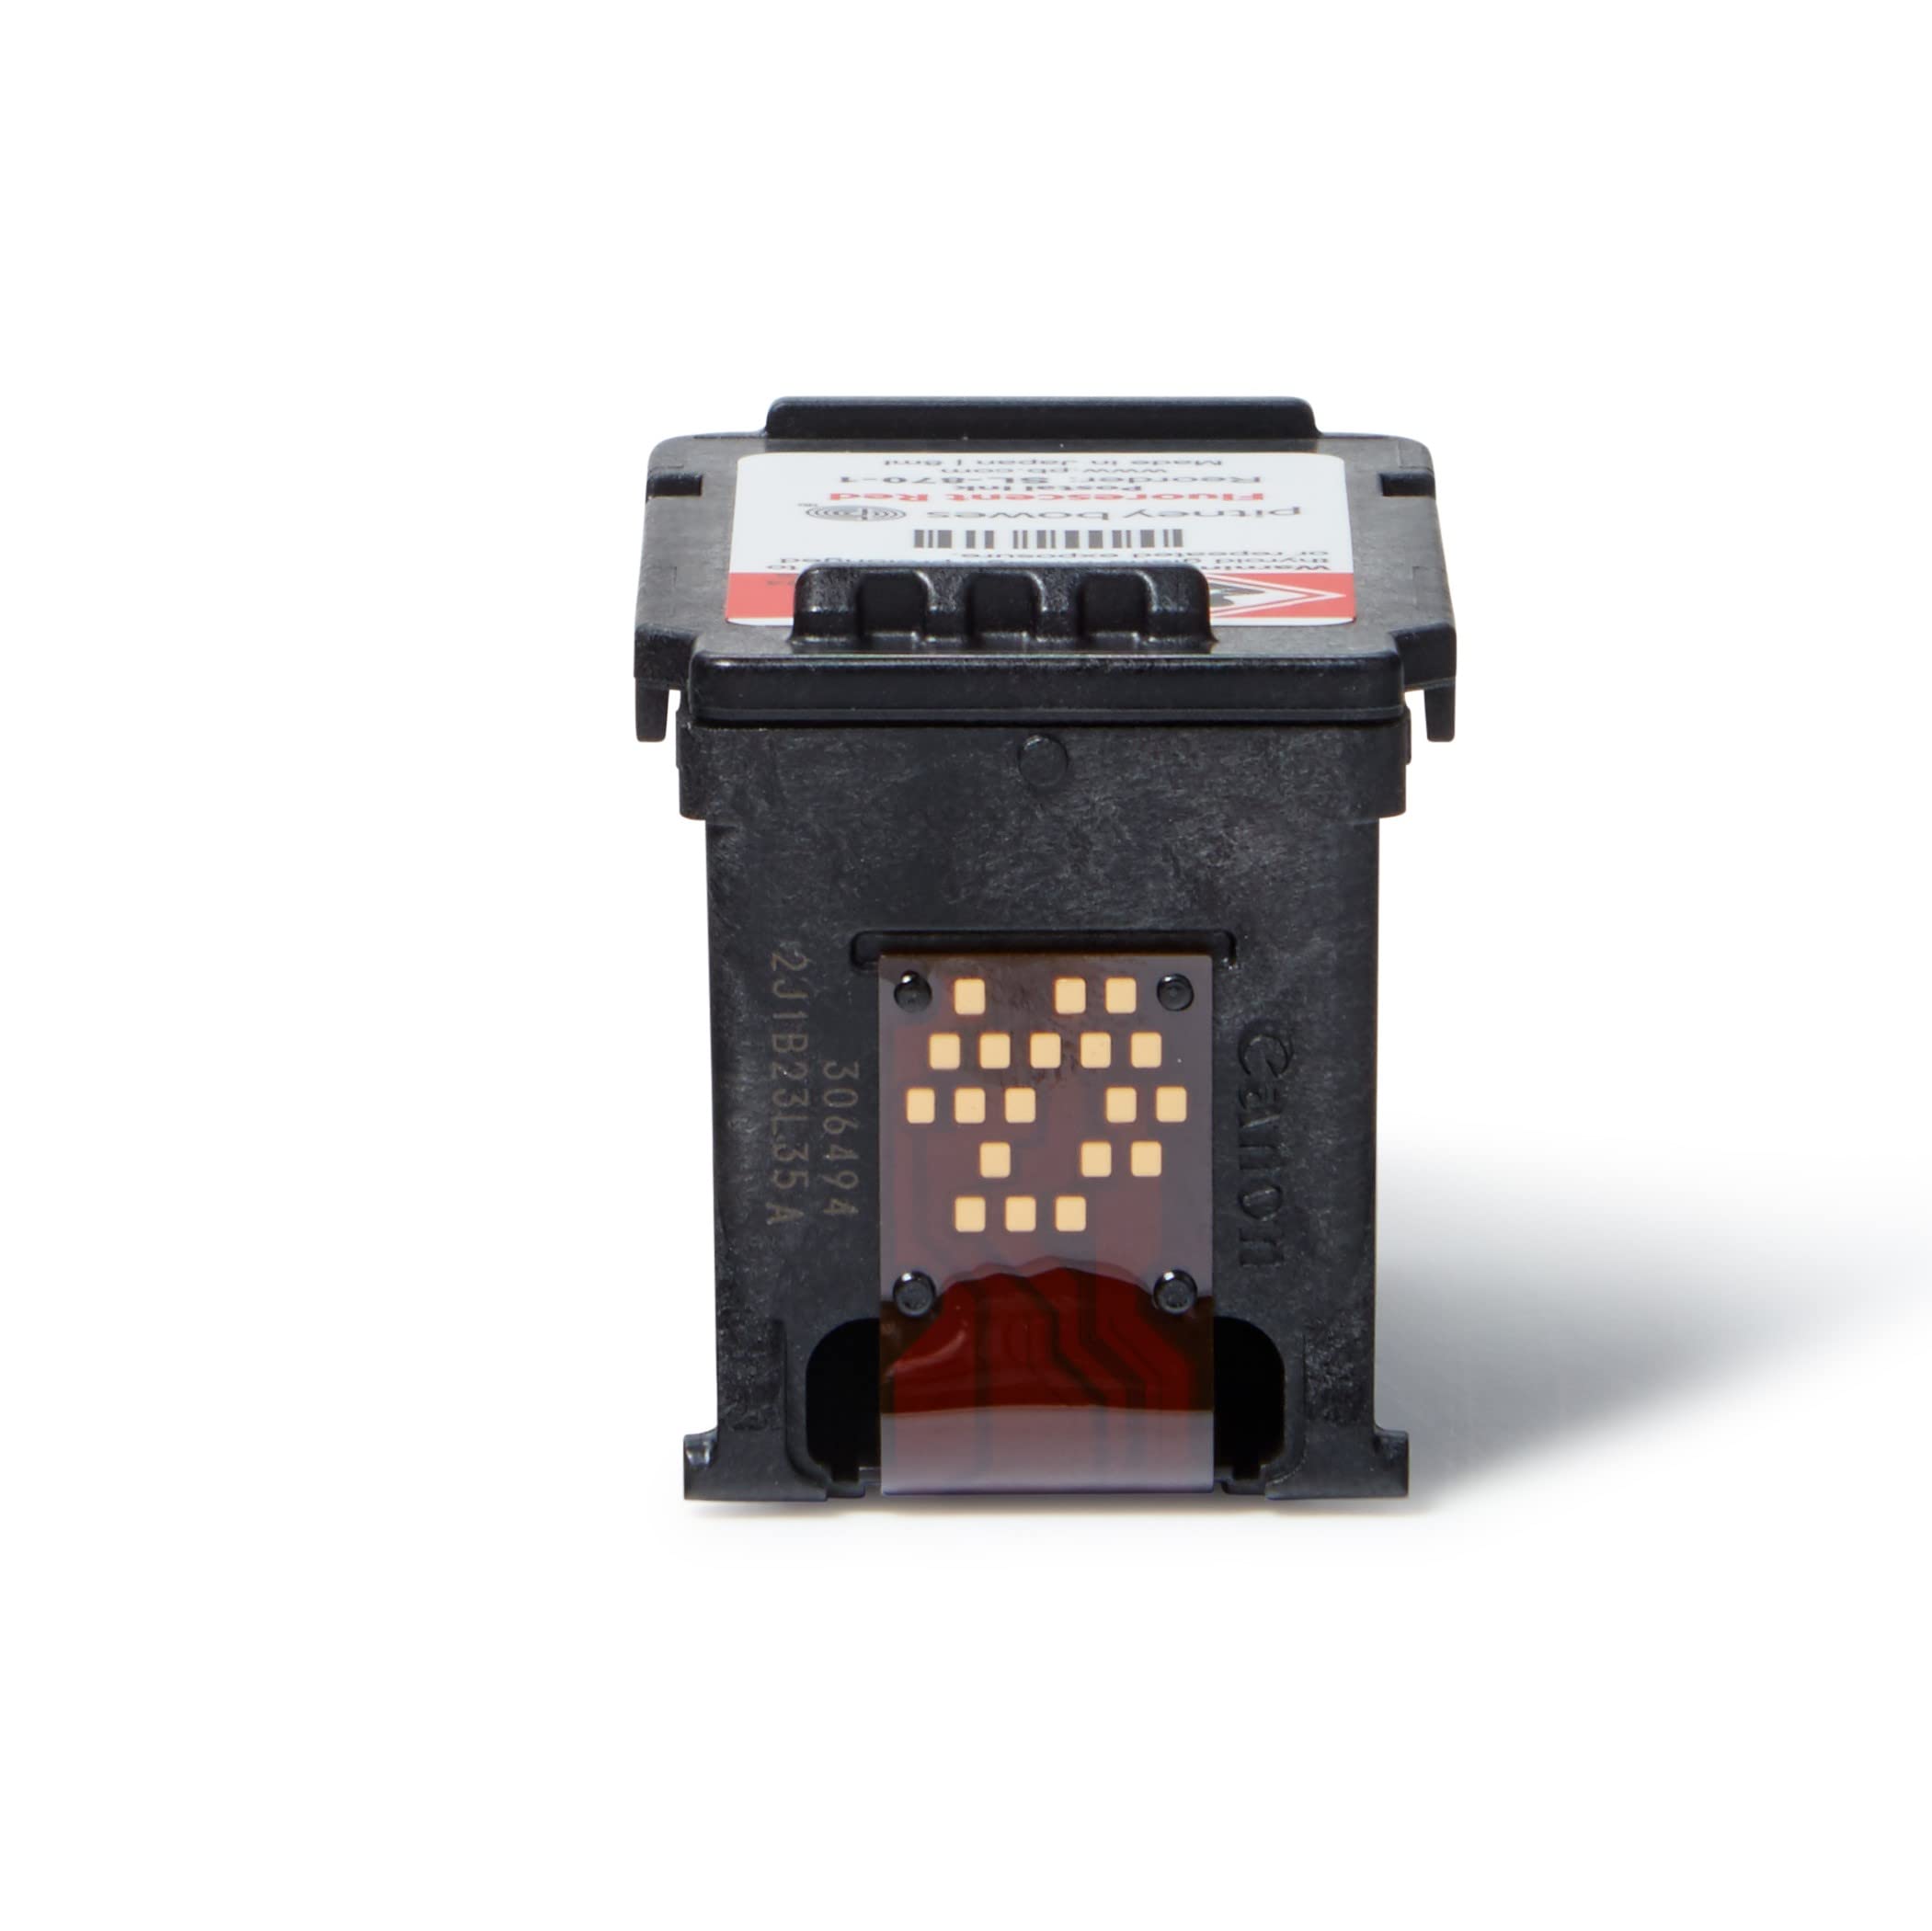 Pitney Bowes SL-870-1 Ink Cartridge for SendPro Mailstation, Red Ink, 8 ml